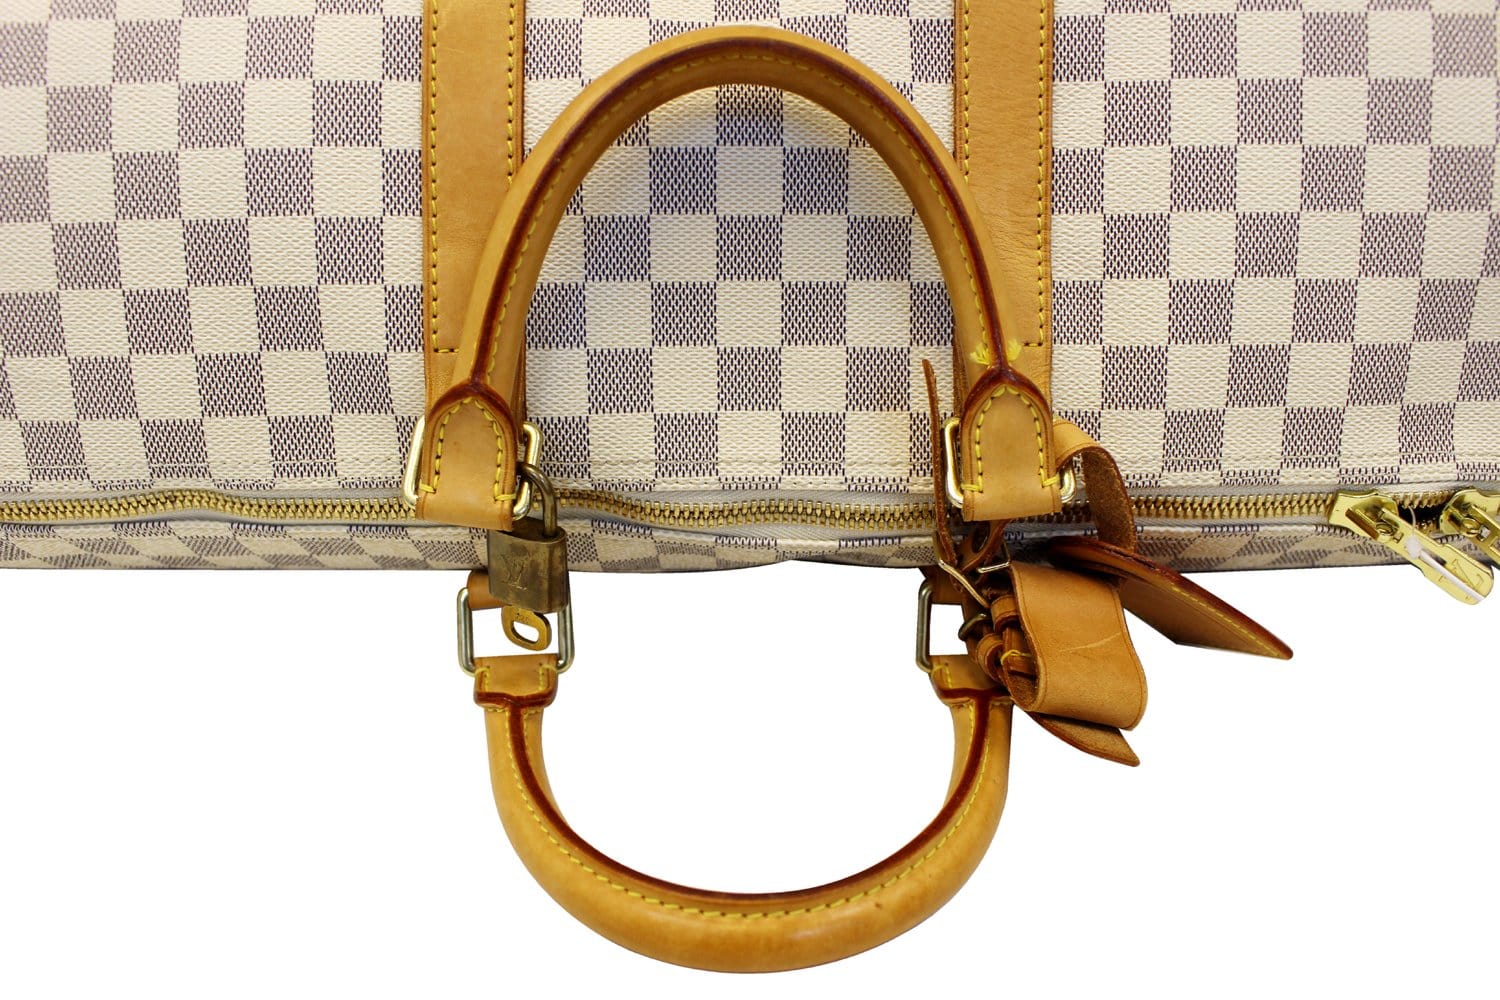 Louis Vuitton Keepall Bandouliere 55 Duffle Bag Damier Azur N41429